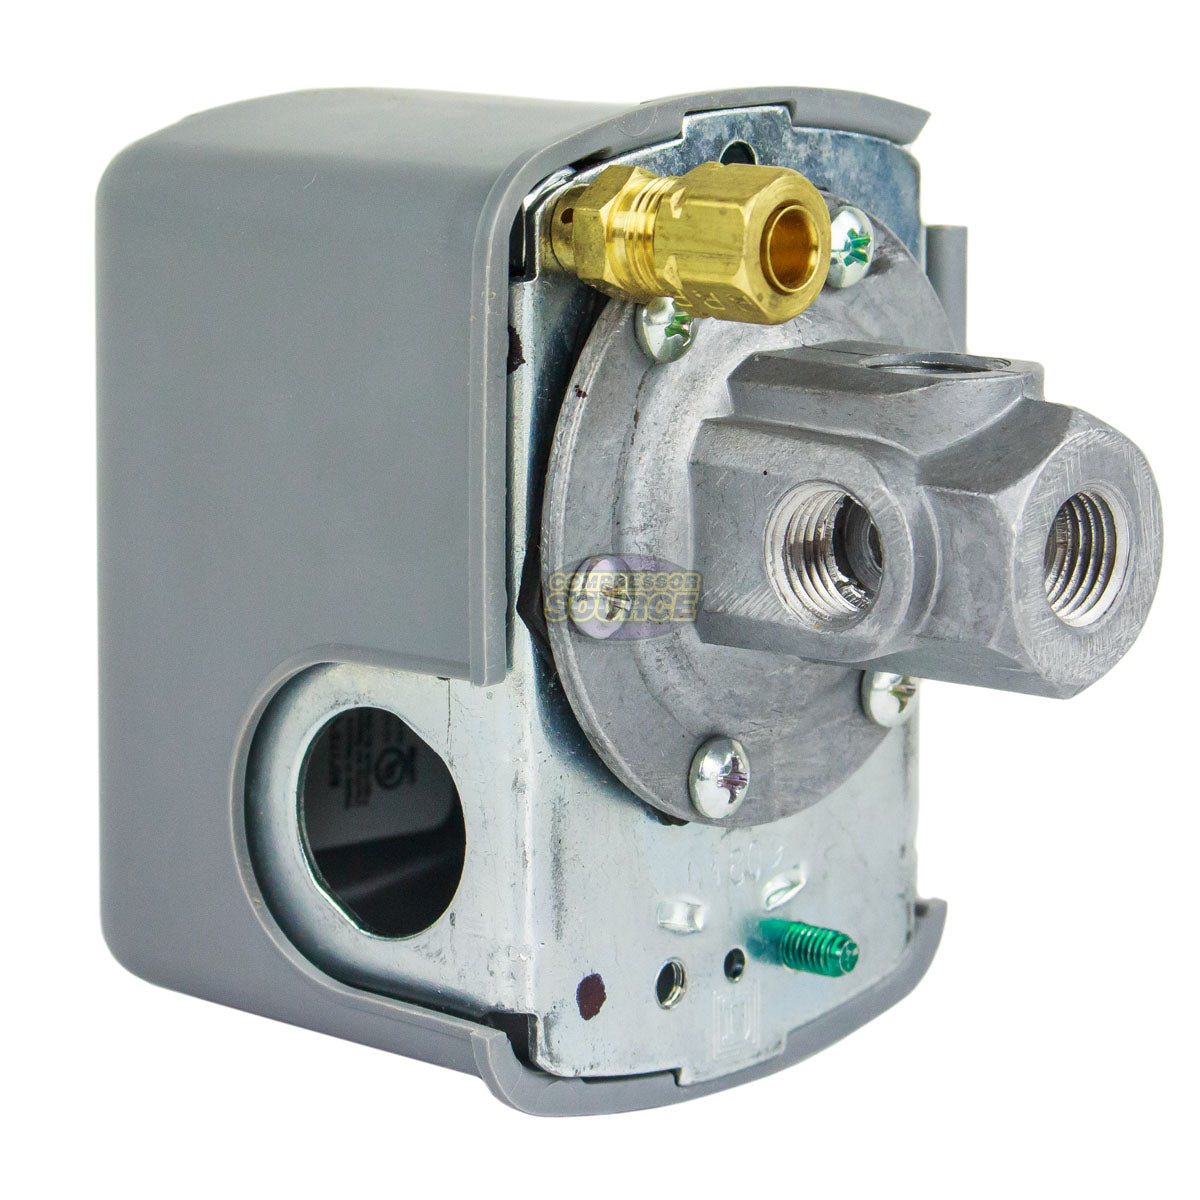 Square D 4 Port 135-175 PSI Air Compressor Pressure Switch 9013FHG54J59M1X New